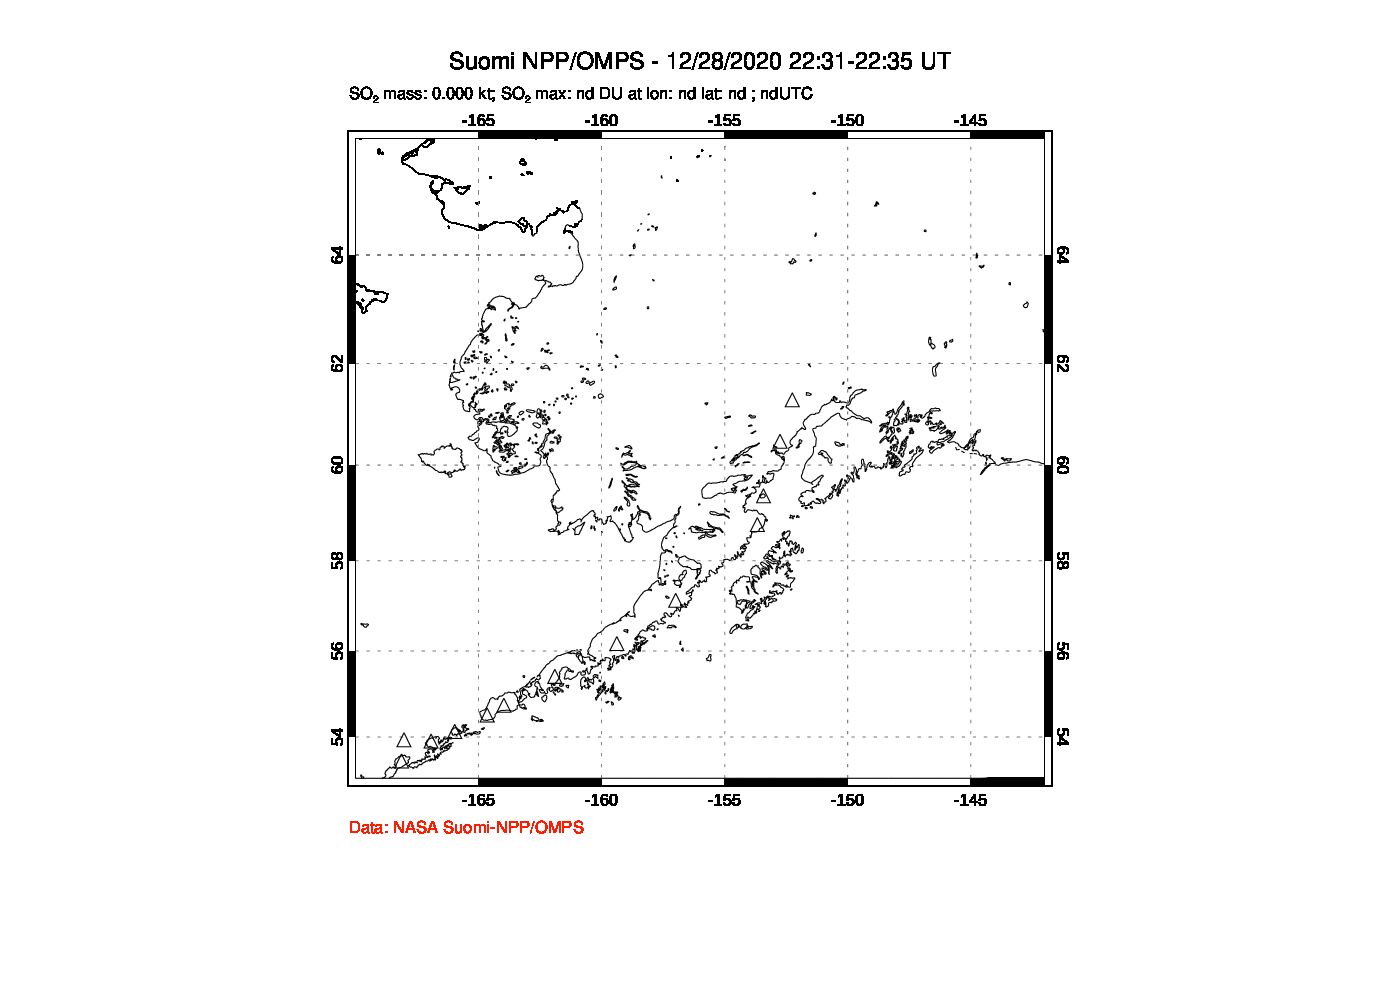 A sulfur dioxide image over Alaska, USA on Dec 28, 2020.